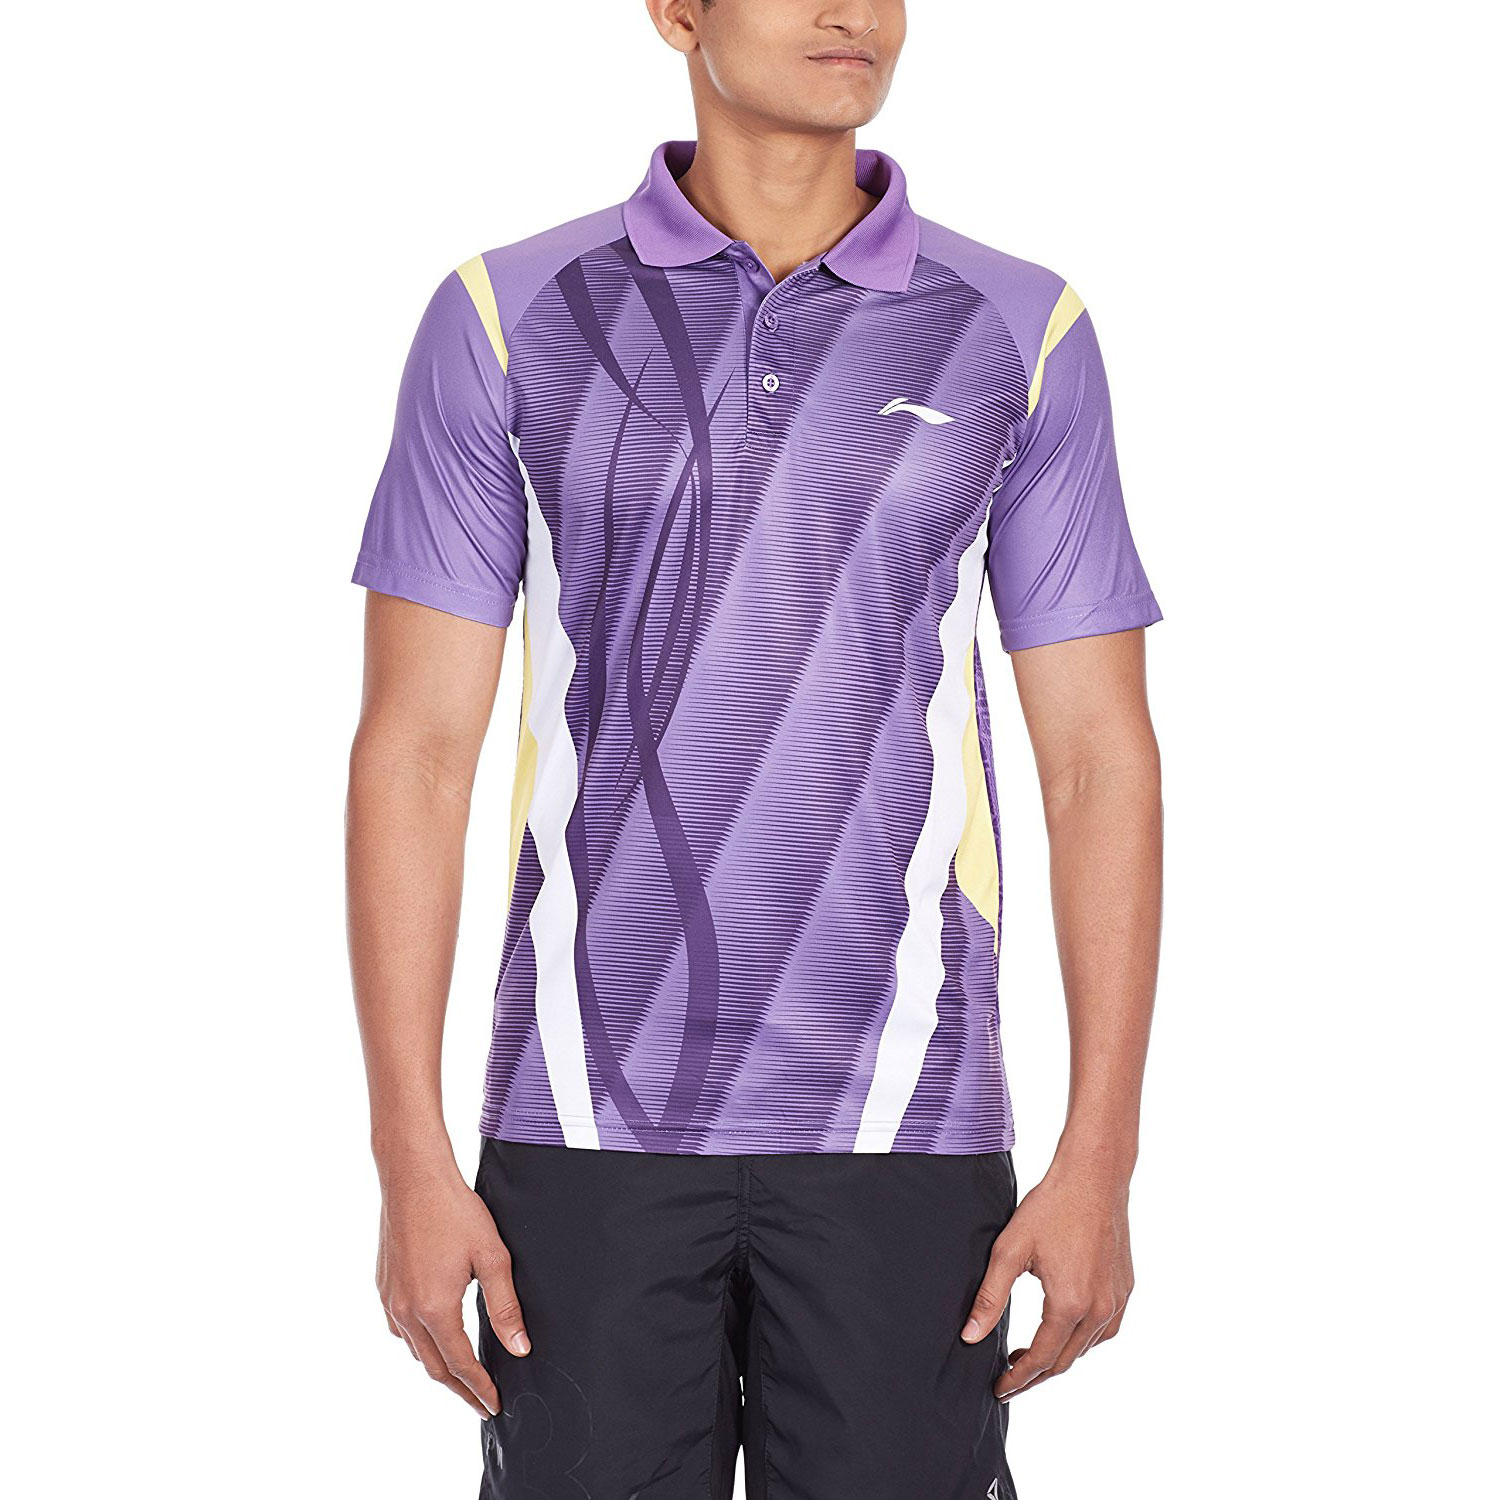 Li-Ning ALPH421-5 Collar Badminton T-Shirt, Men's (Purple) 